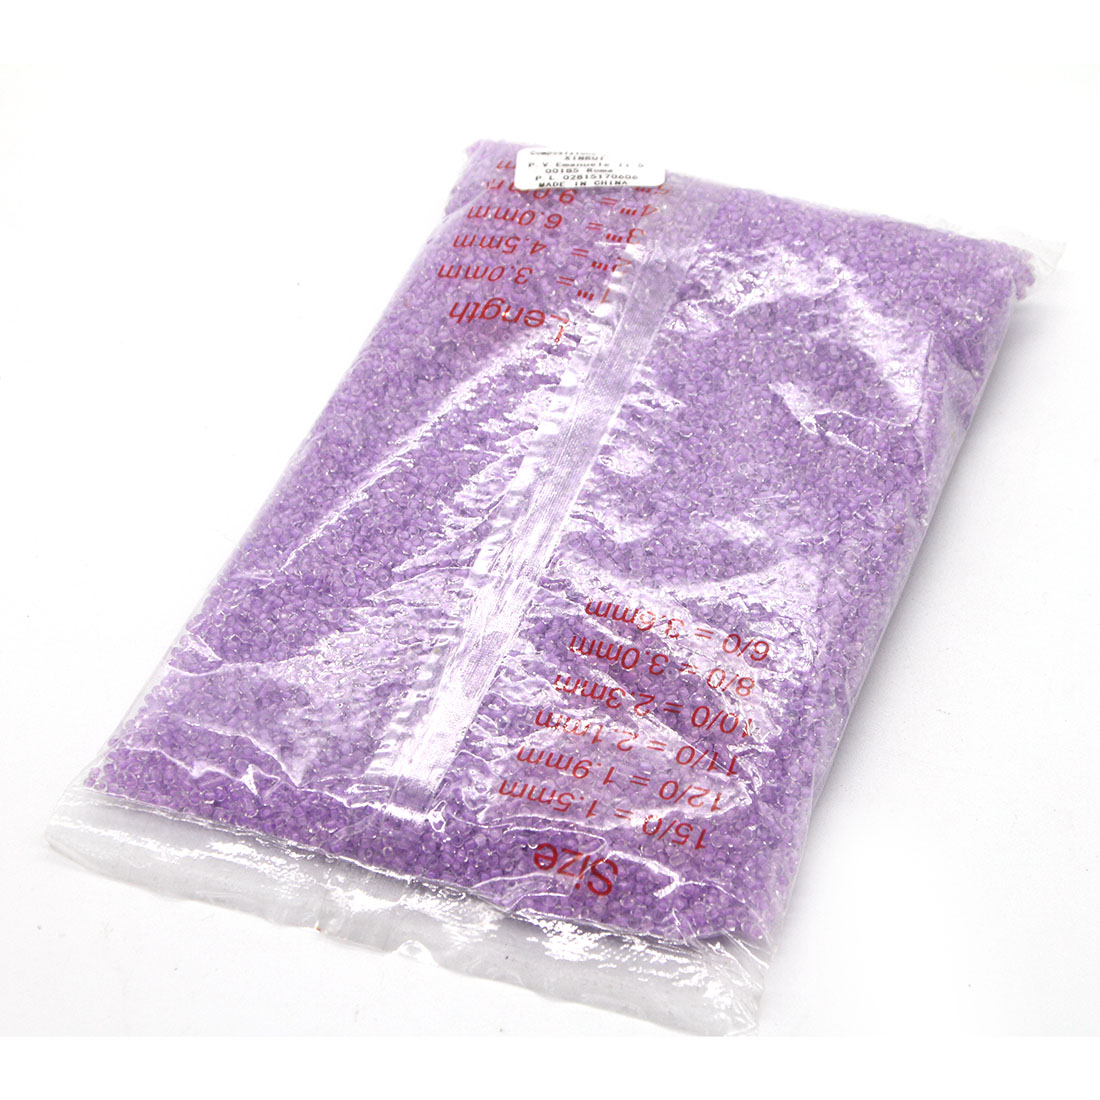 Light purple 4mm 4500 packs